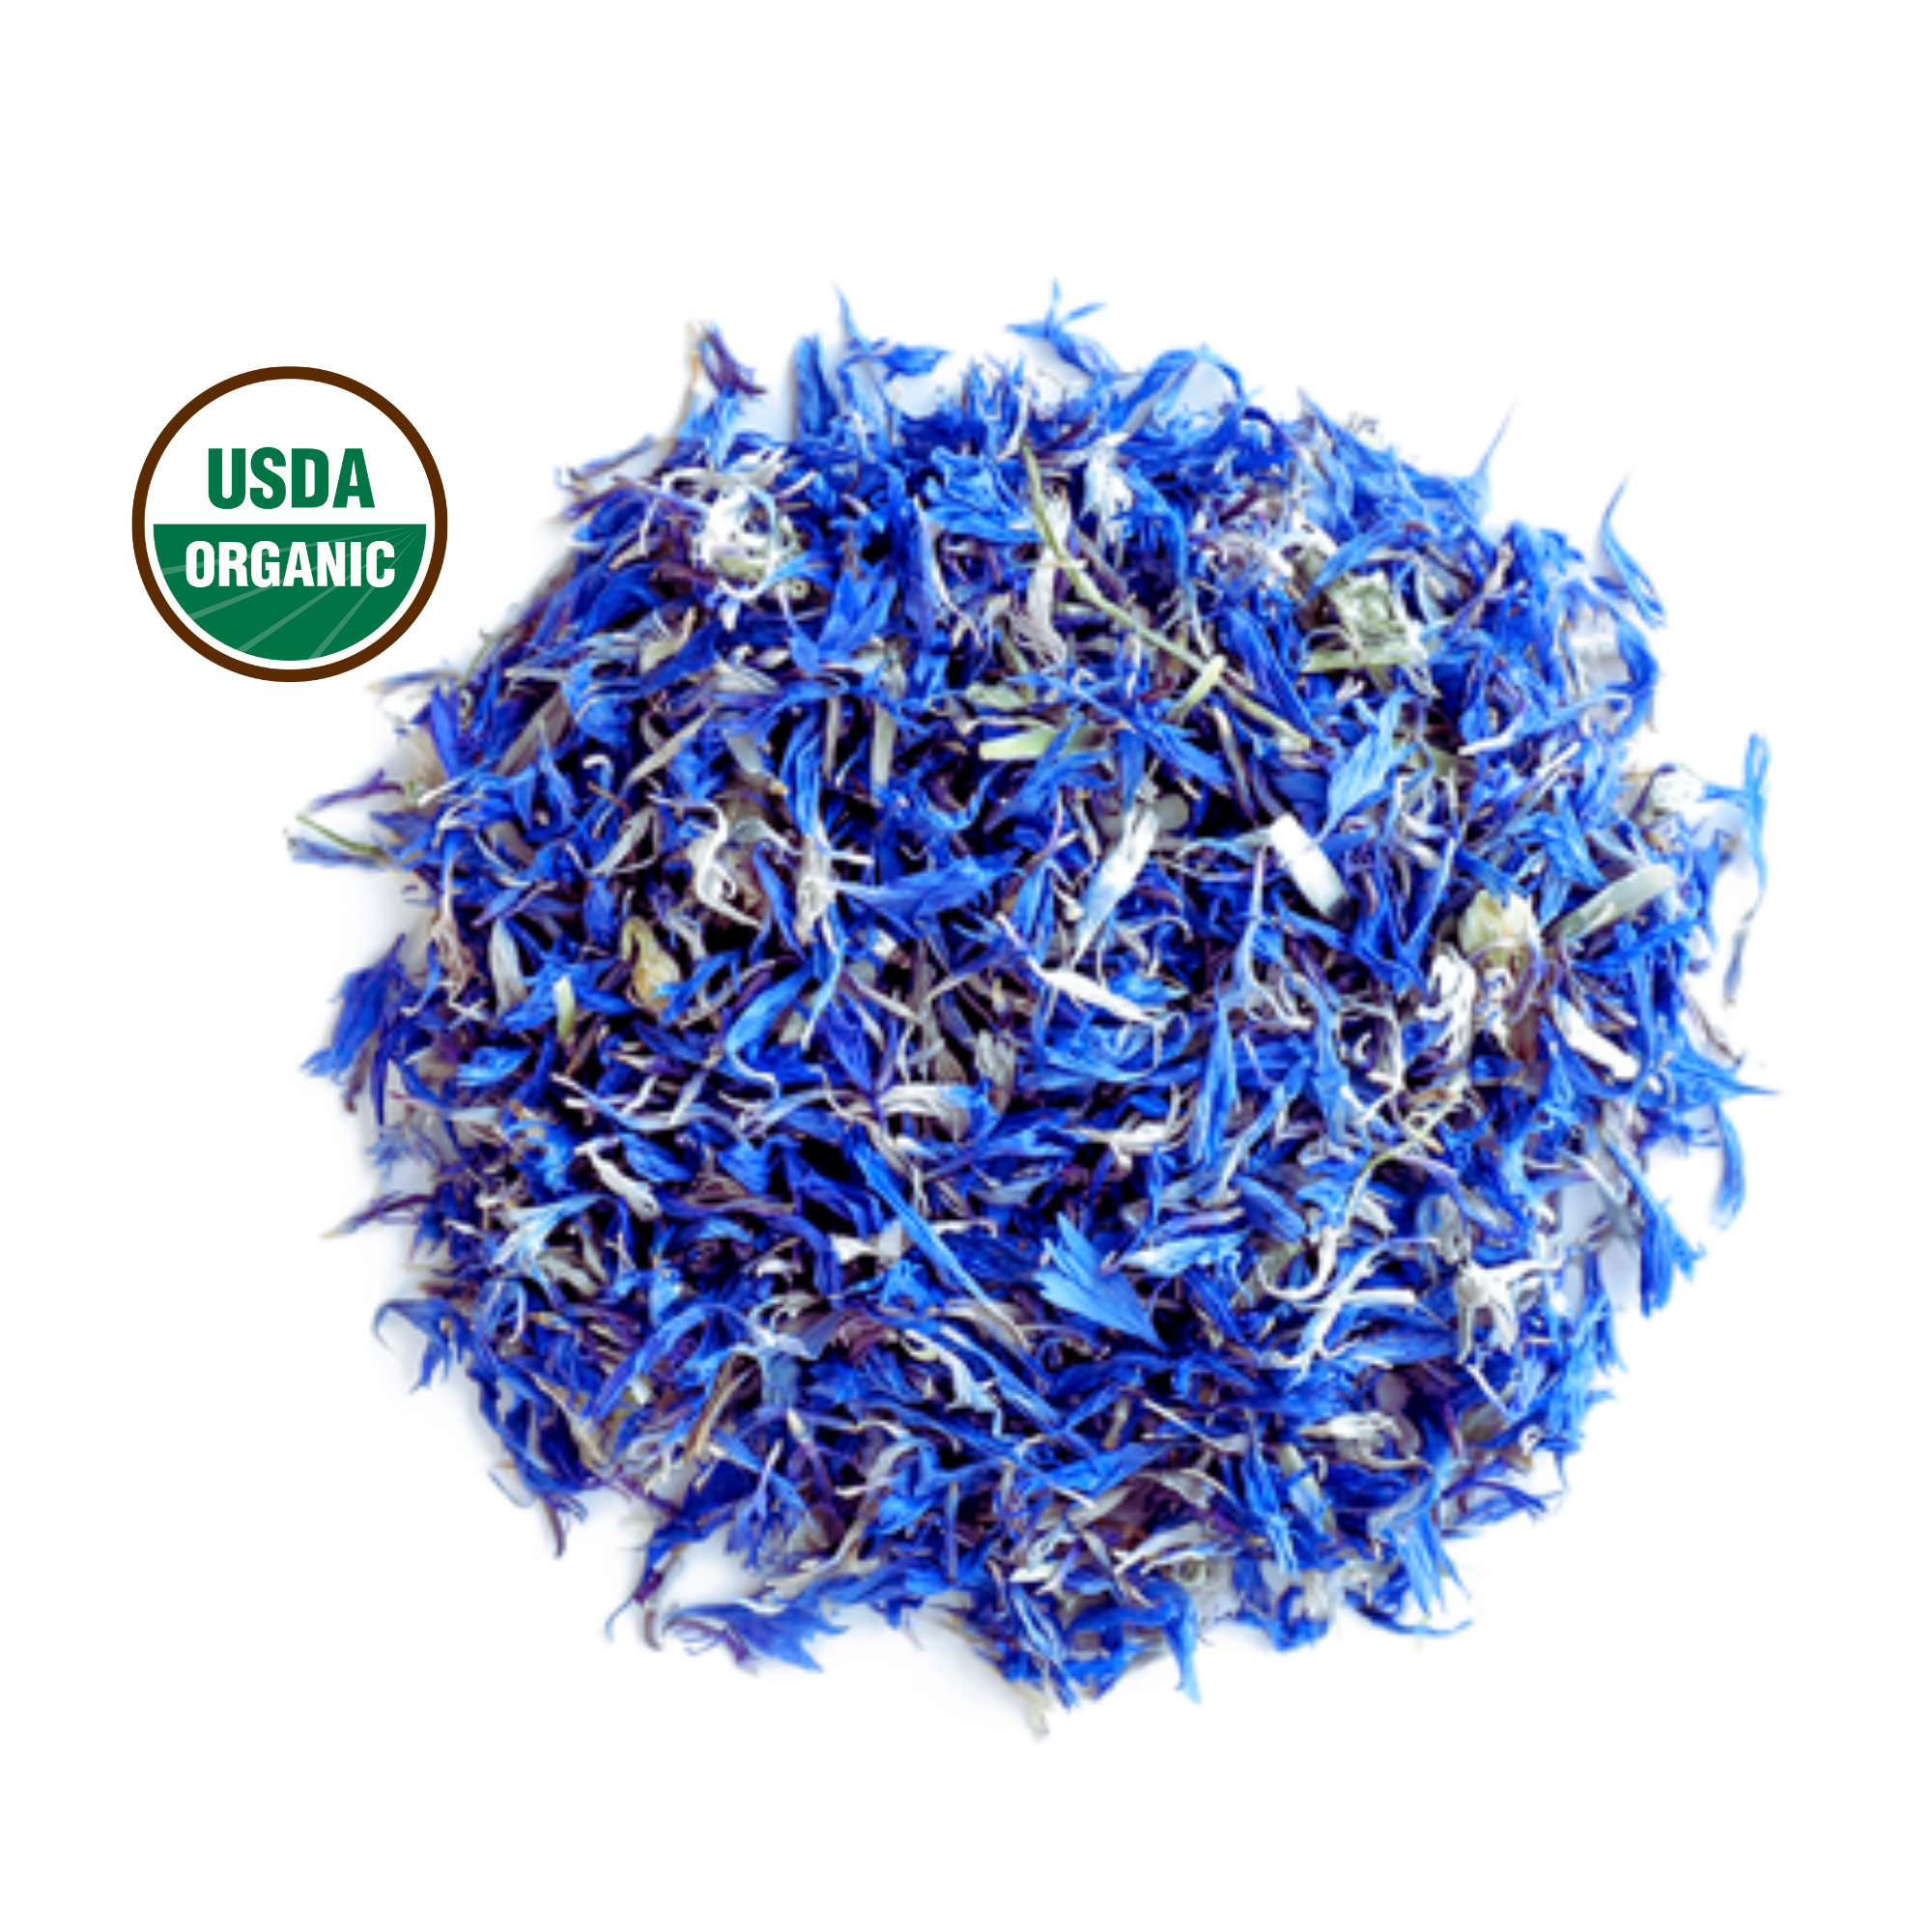 1 oz EDIBLE BLUE CORNFLOWER PETALS Dried Flowers Herbs 100